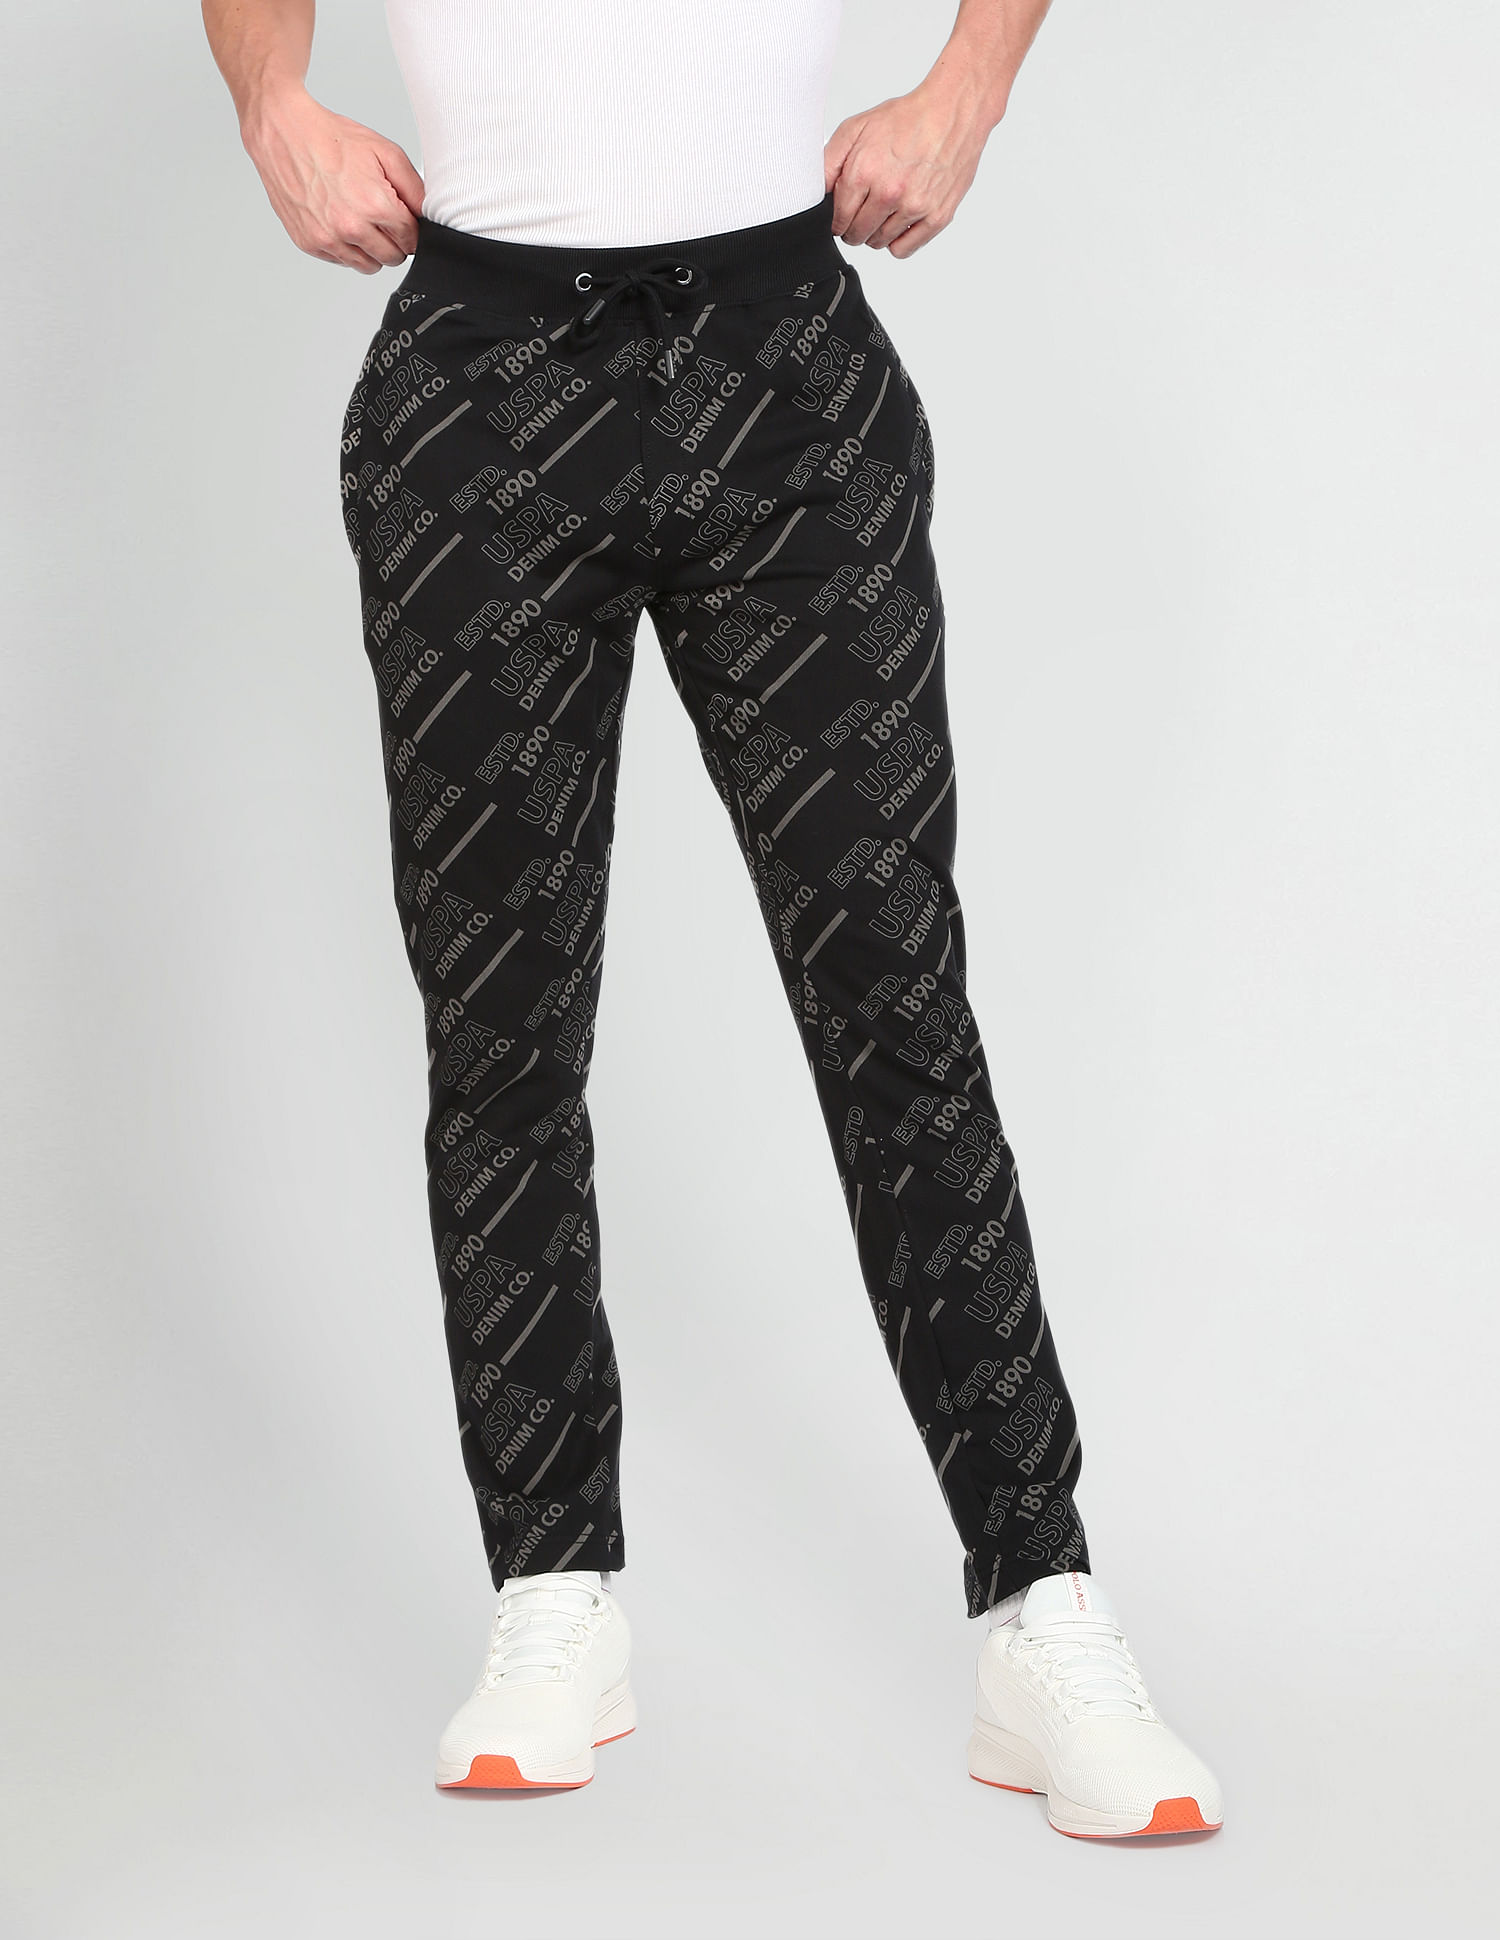 Clothing - IVY PARK 3-in-1 Track Pants (All Gender) - Black | adidas Oman